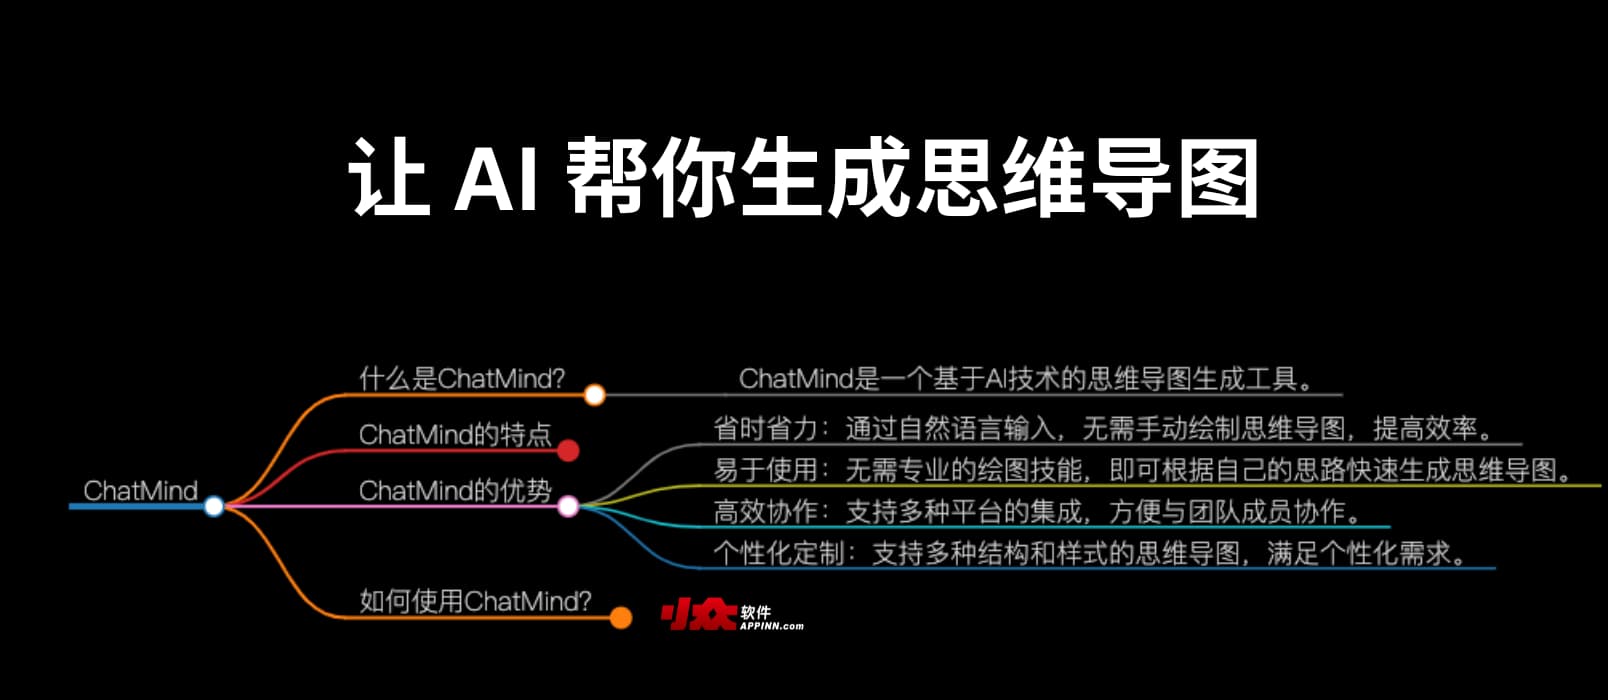 ChatMind - 让 AI 自动生成思维导图